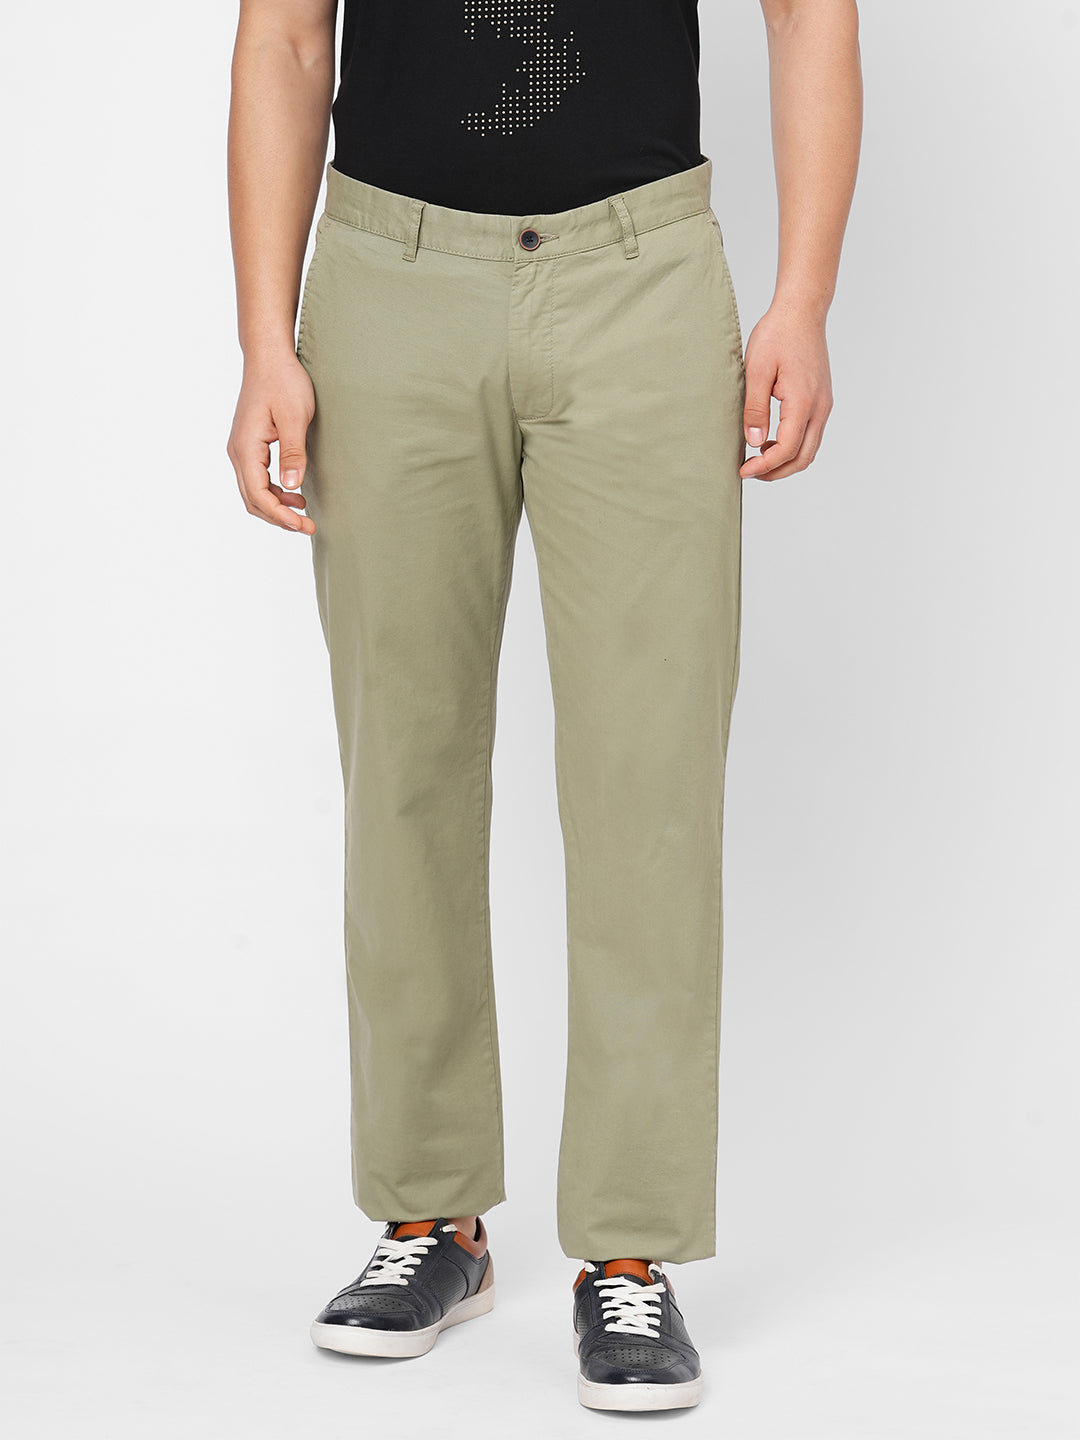 Men's Green Cotton Lycra Regular Fit Pant